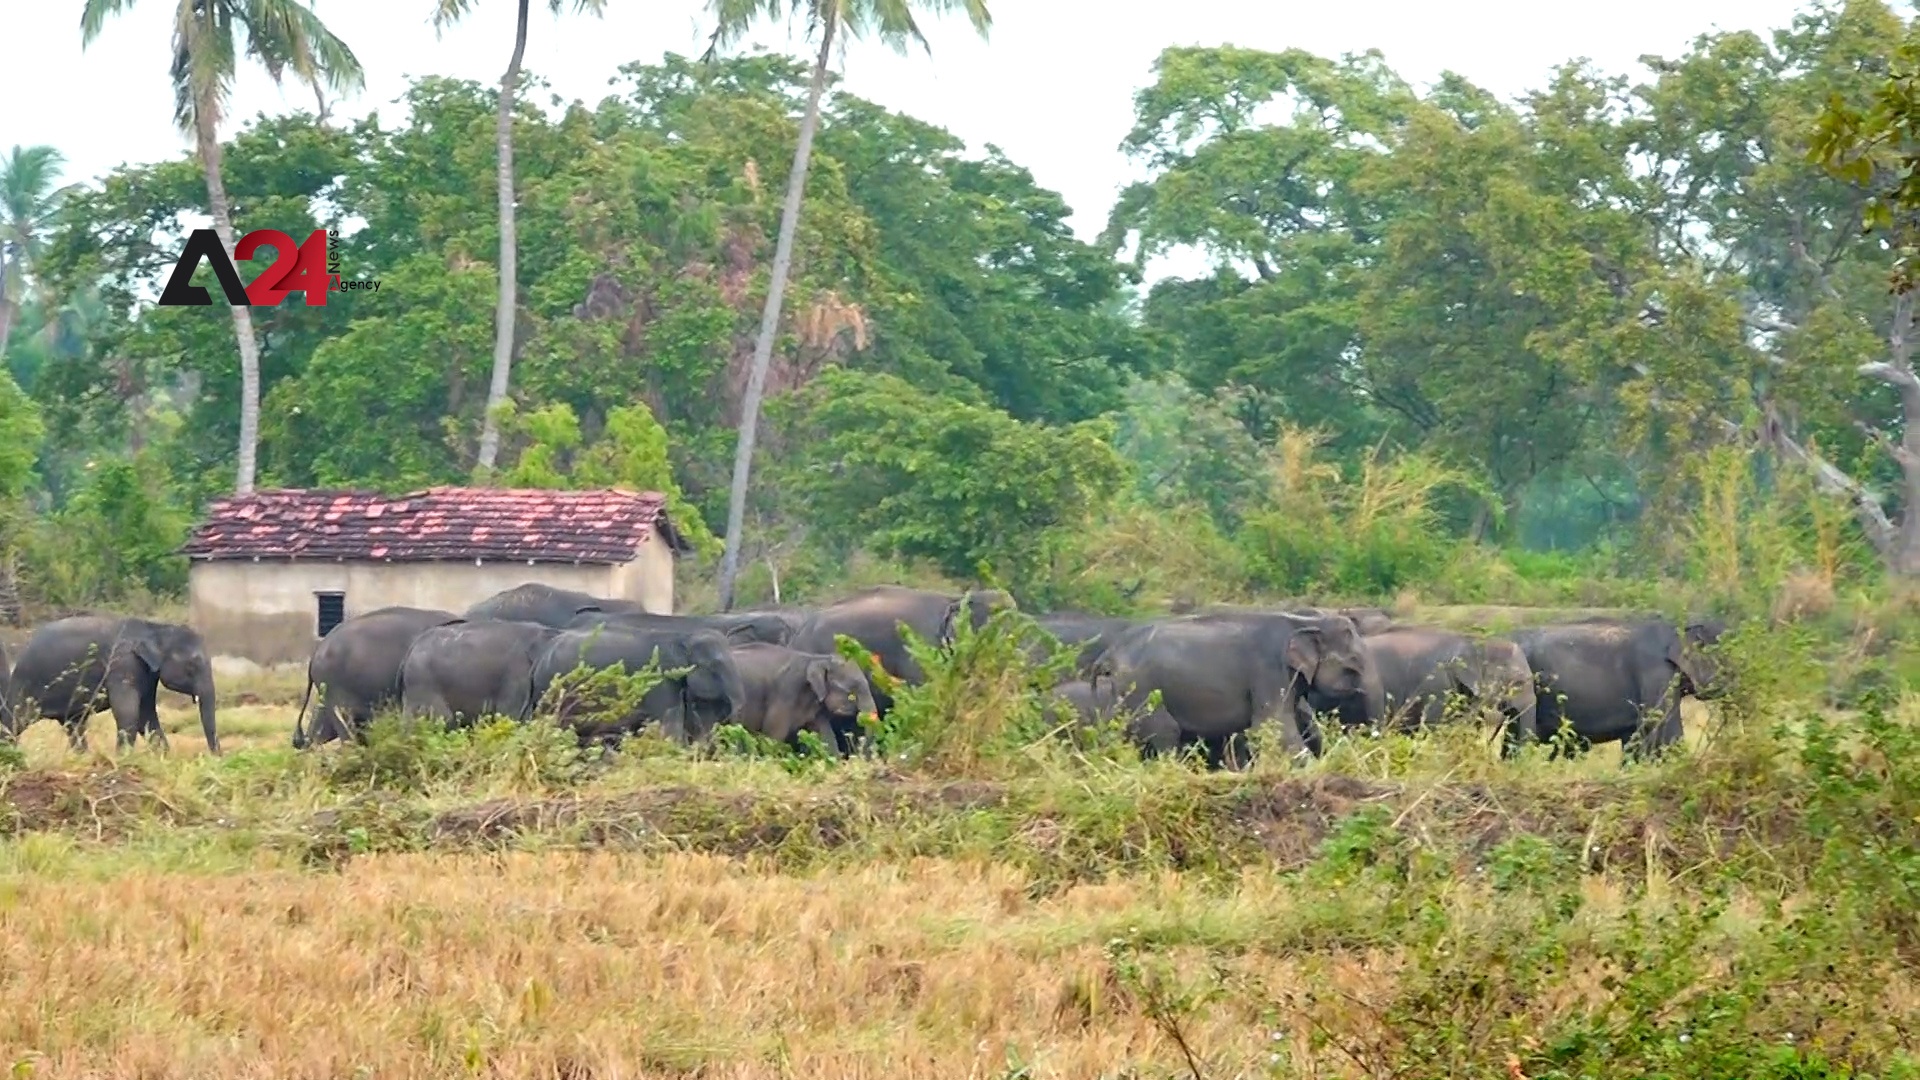 Sri Lanka - Wild elephants demolish houses in Polonnaruwa in search of food